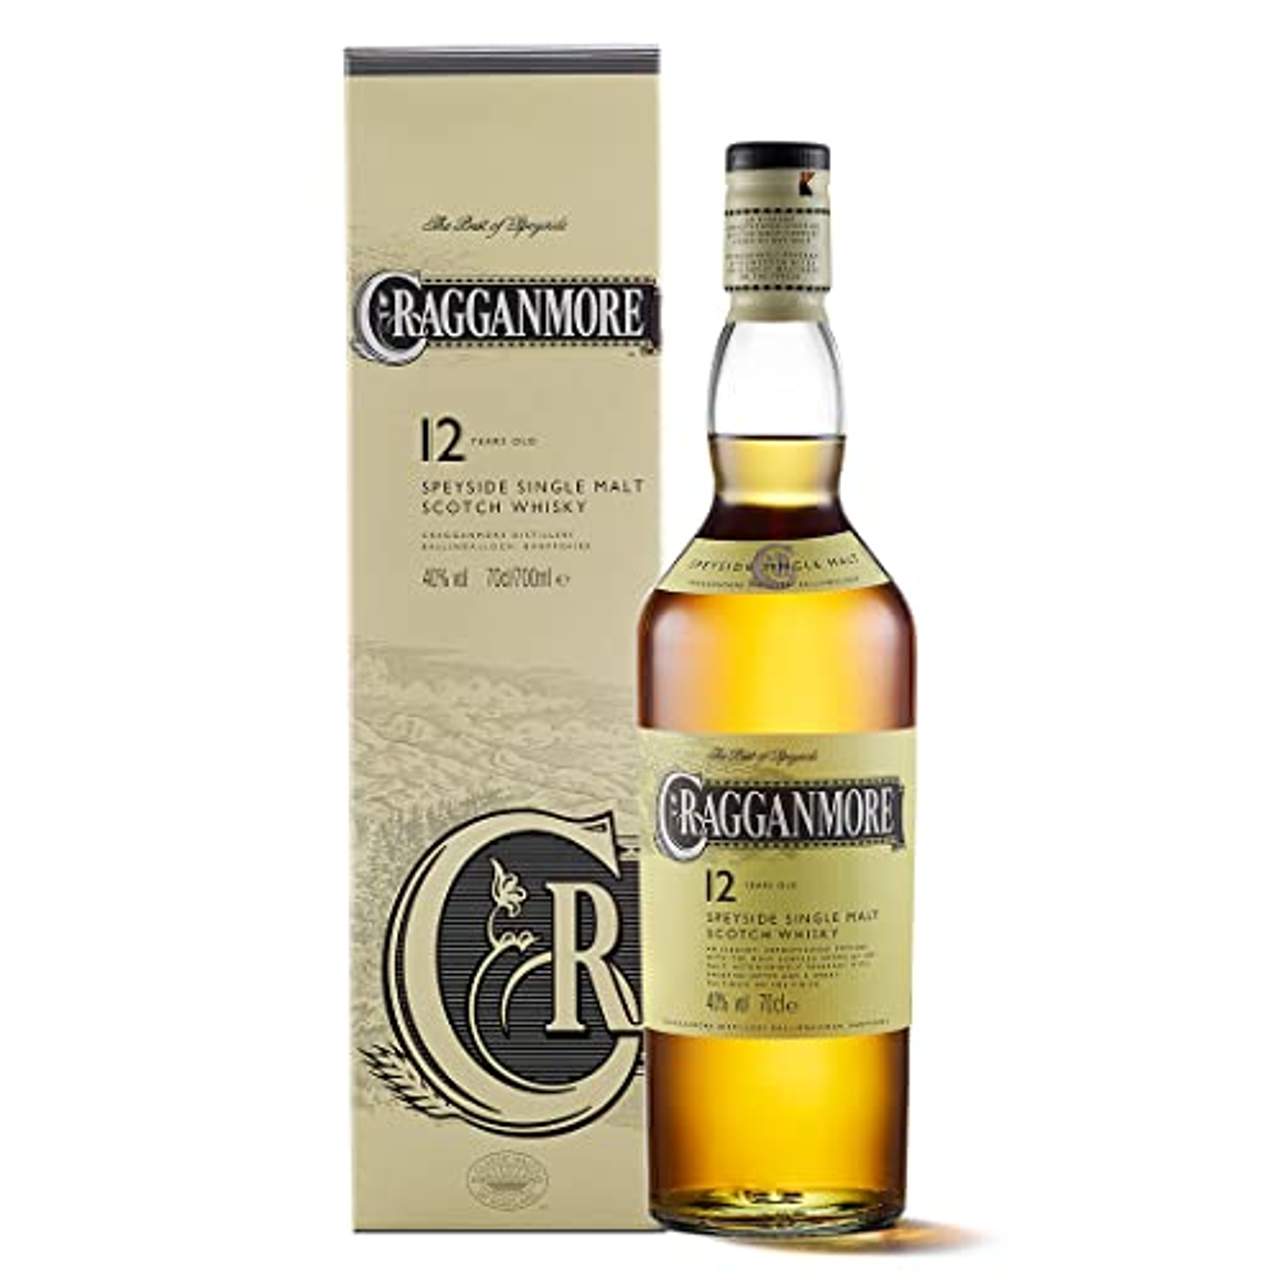 Cragganmore 12 Jahre Speyside Single Malt Scotch Whisky